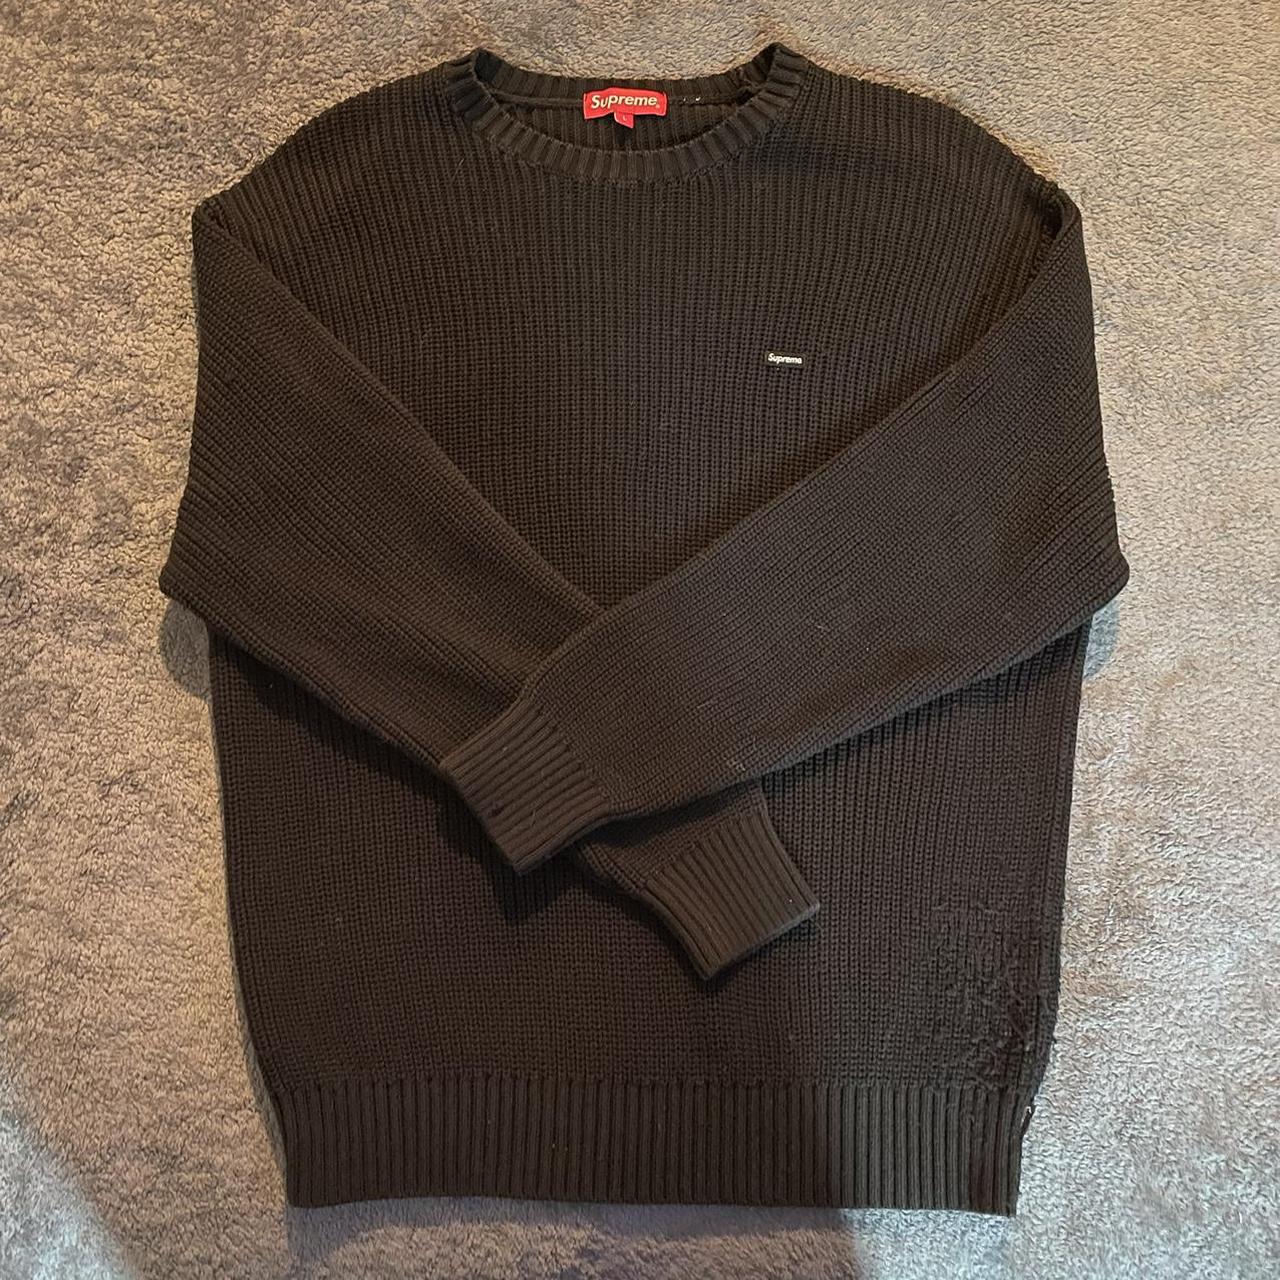 Supreme knit-sweater - Depop